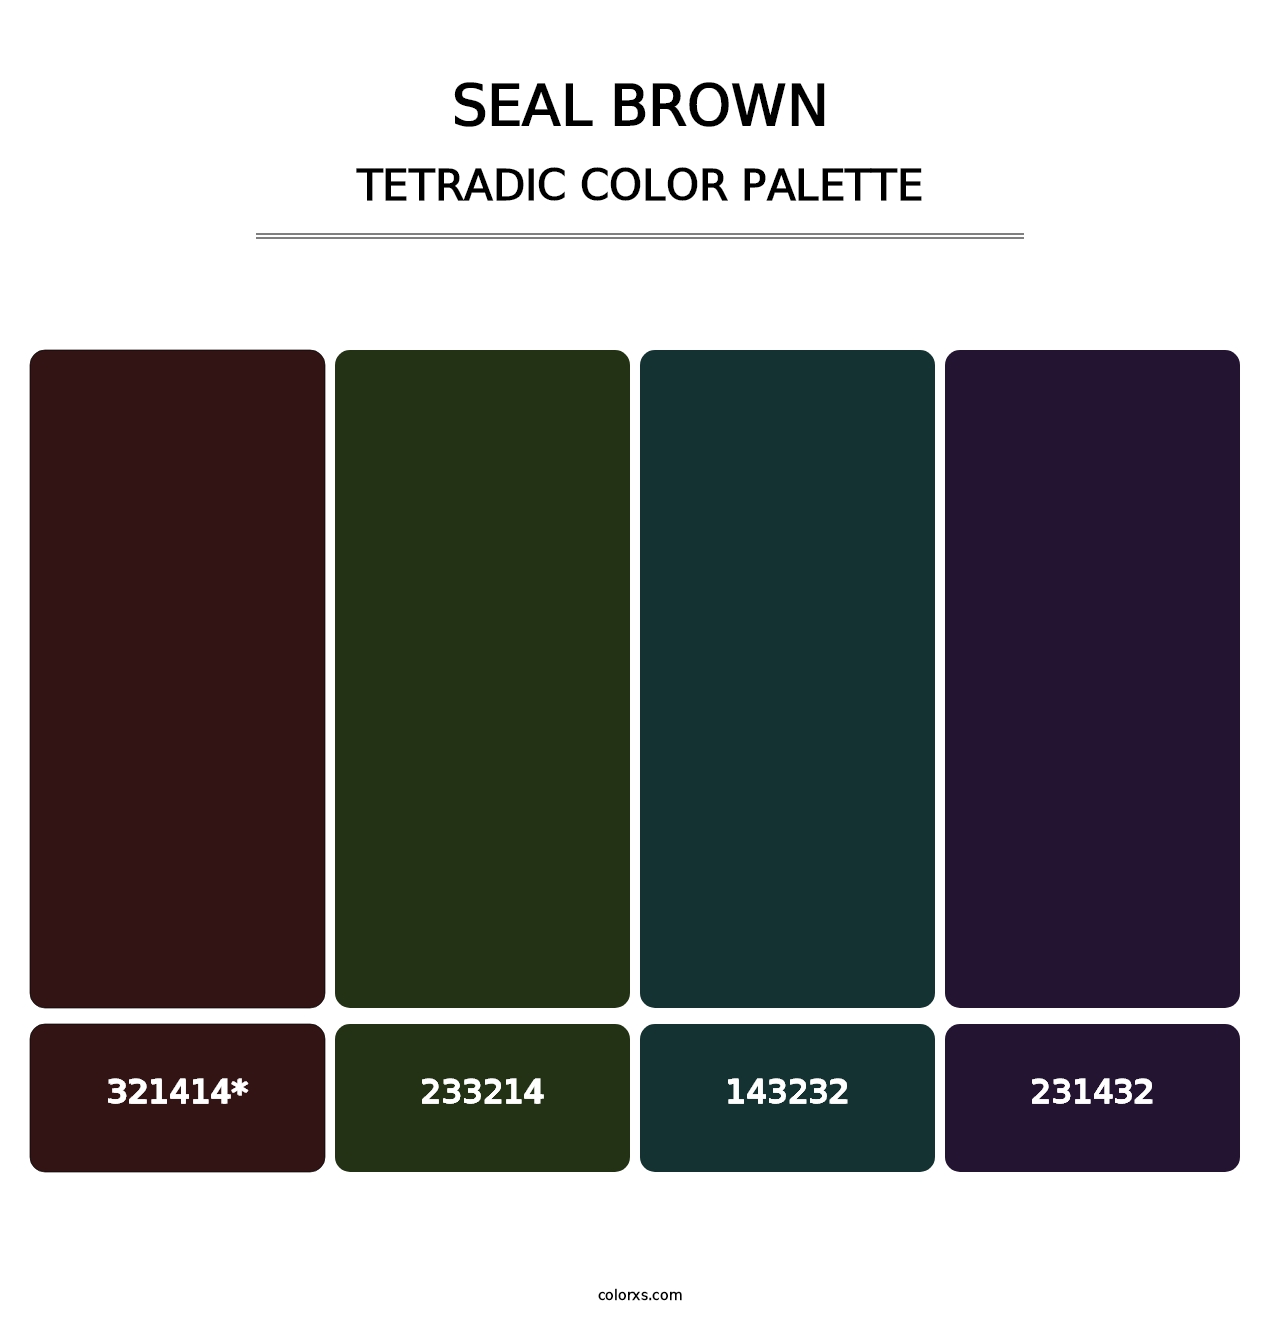 Seal brown - Tetradic Color Palette